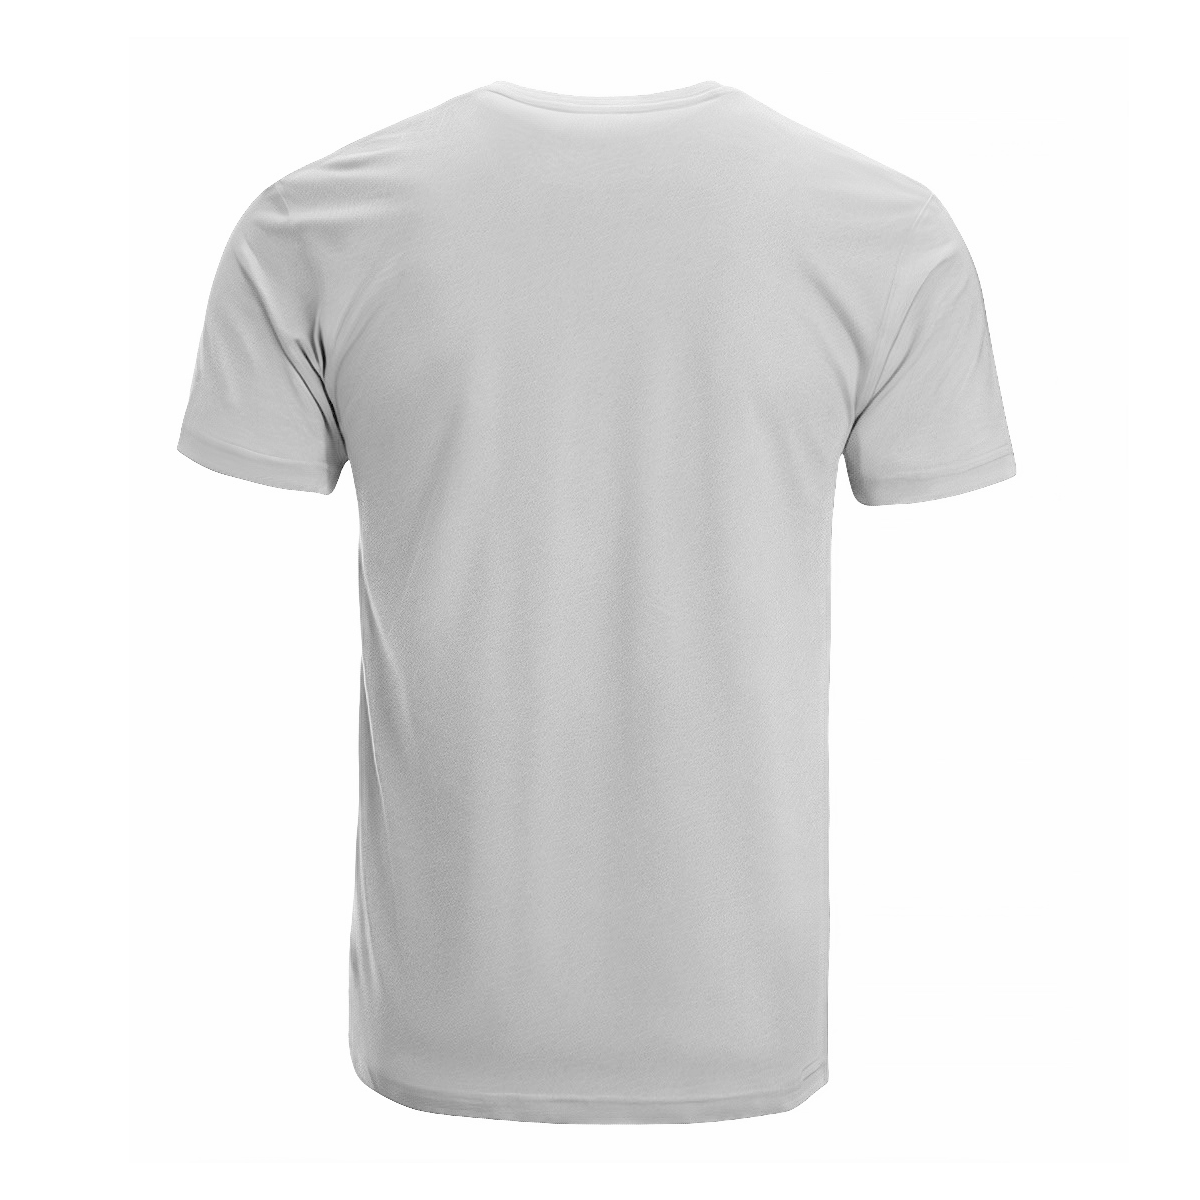 Fleming Tartan Crest T-shirt - I'm not yelling style